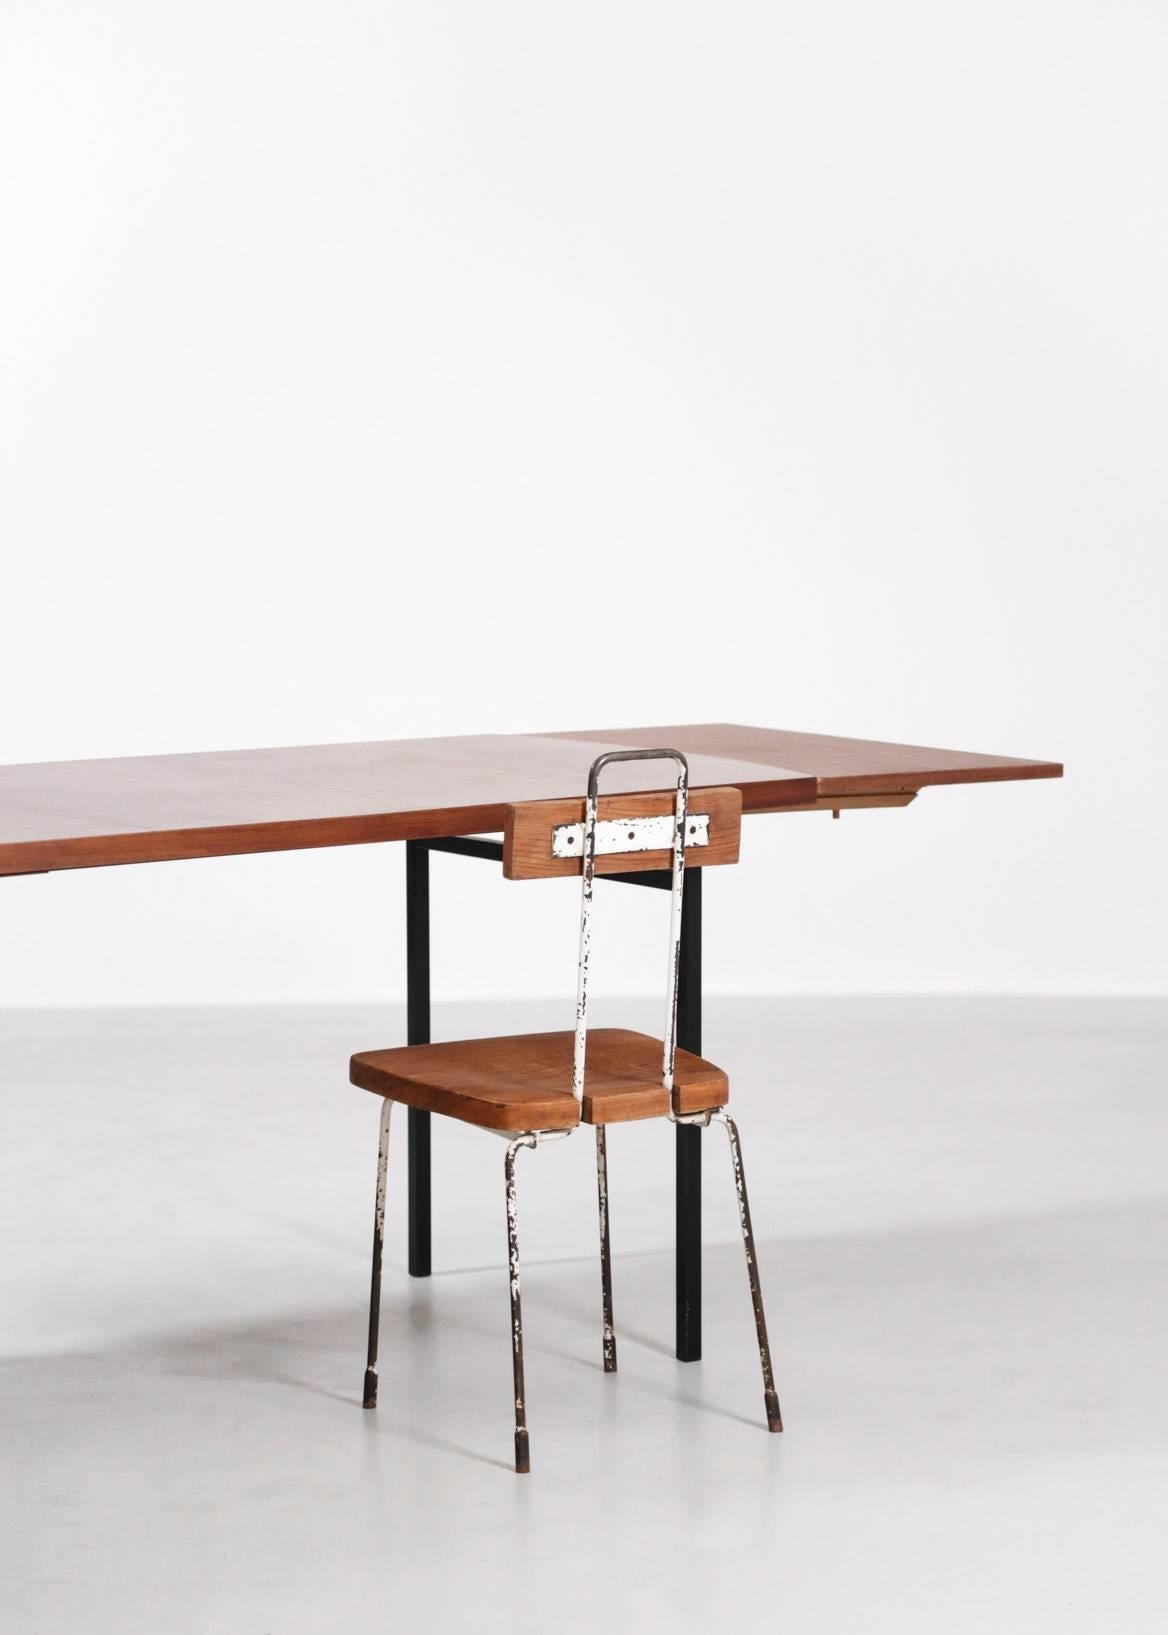 Steel Midcentury Dining Table, Teak, 1960s For Sale